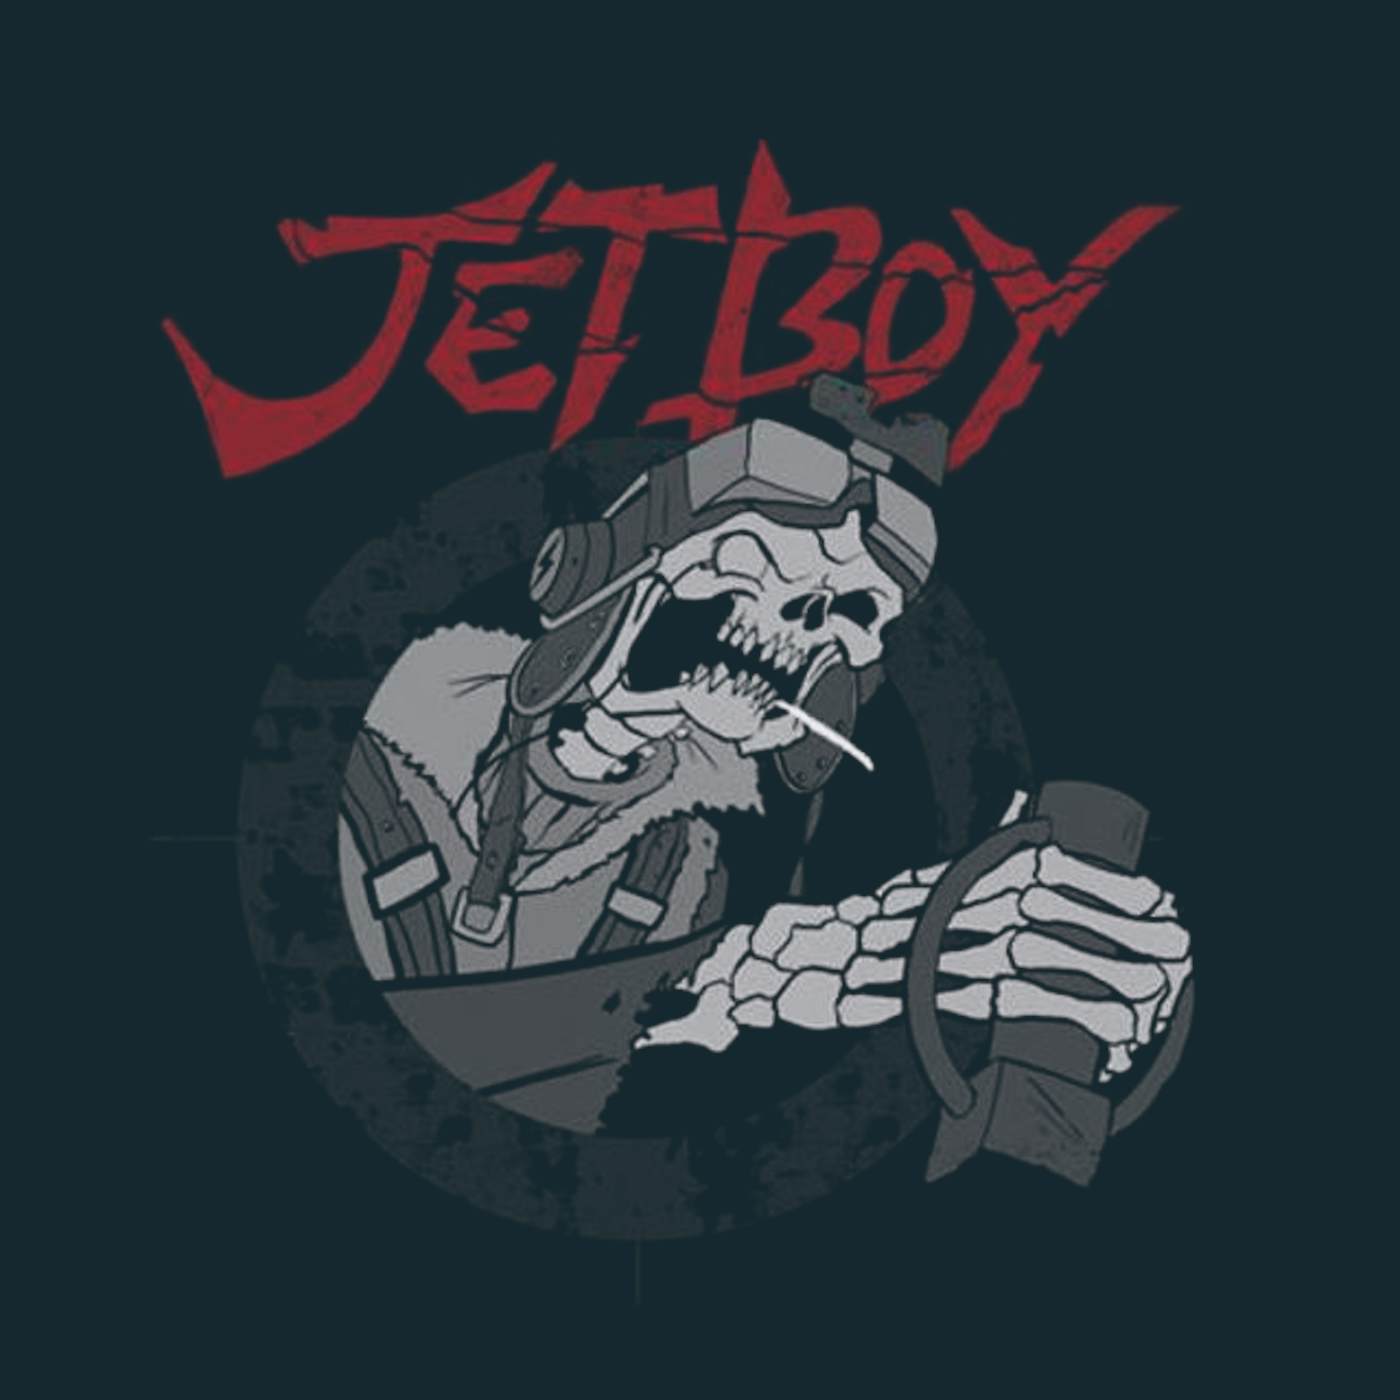 Jetboy